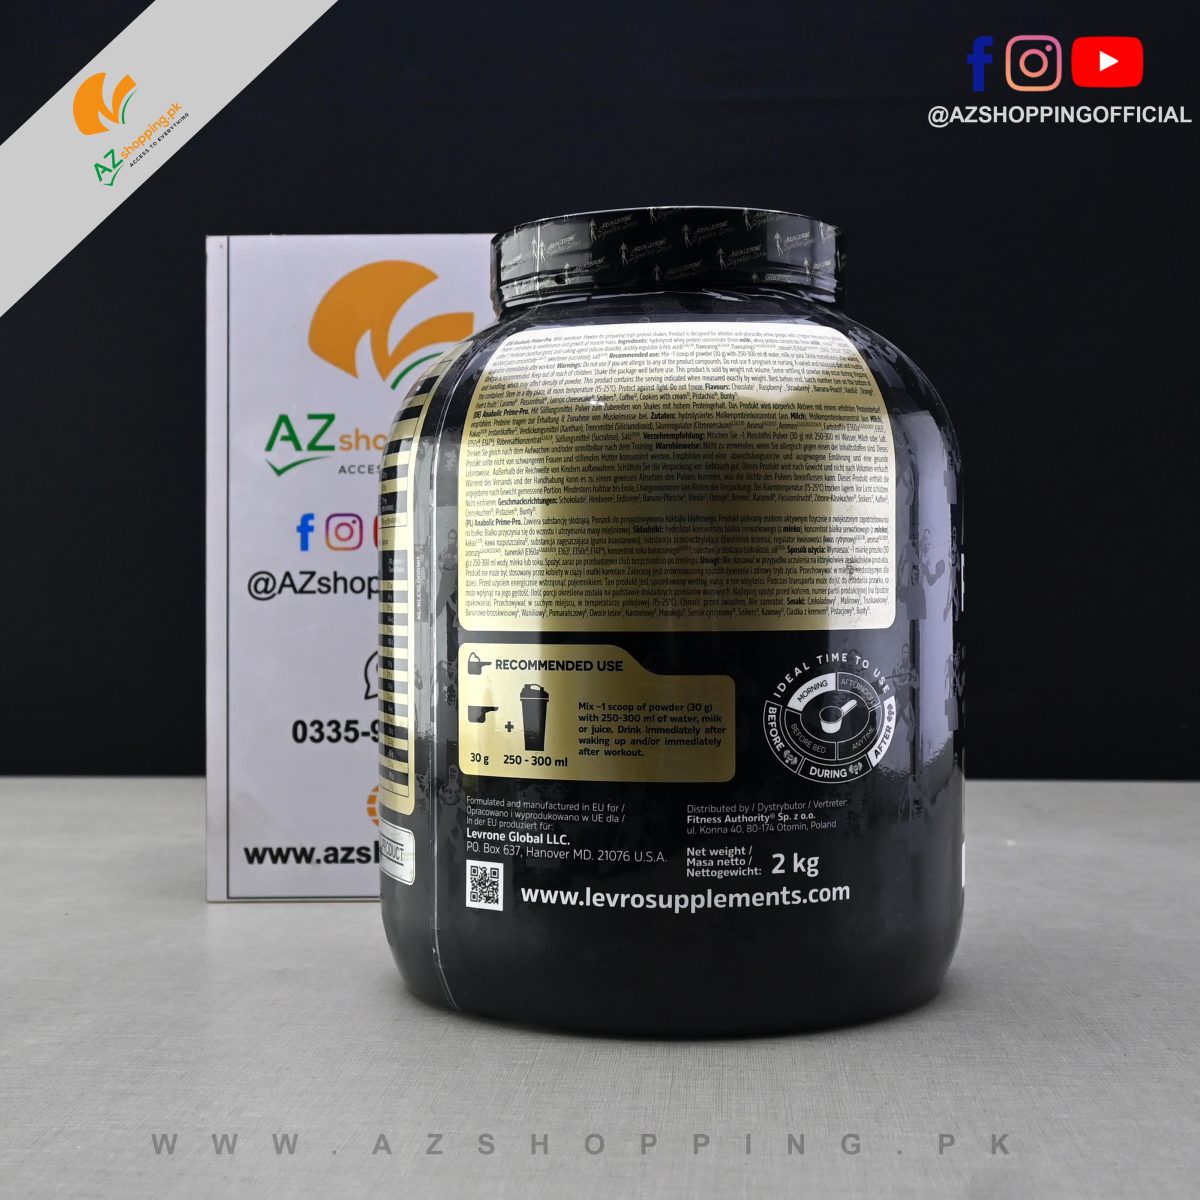 Kevin Levrone Signature Series Black Line – Anabolic Prime-Pro Premium Hydrolysed Whey Protein – Net Wt. 2 kg